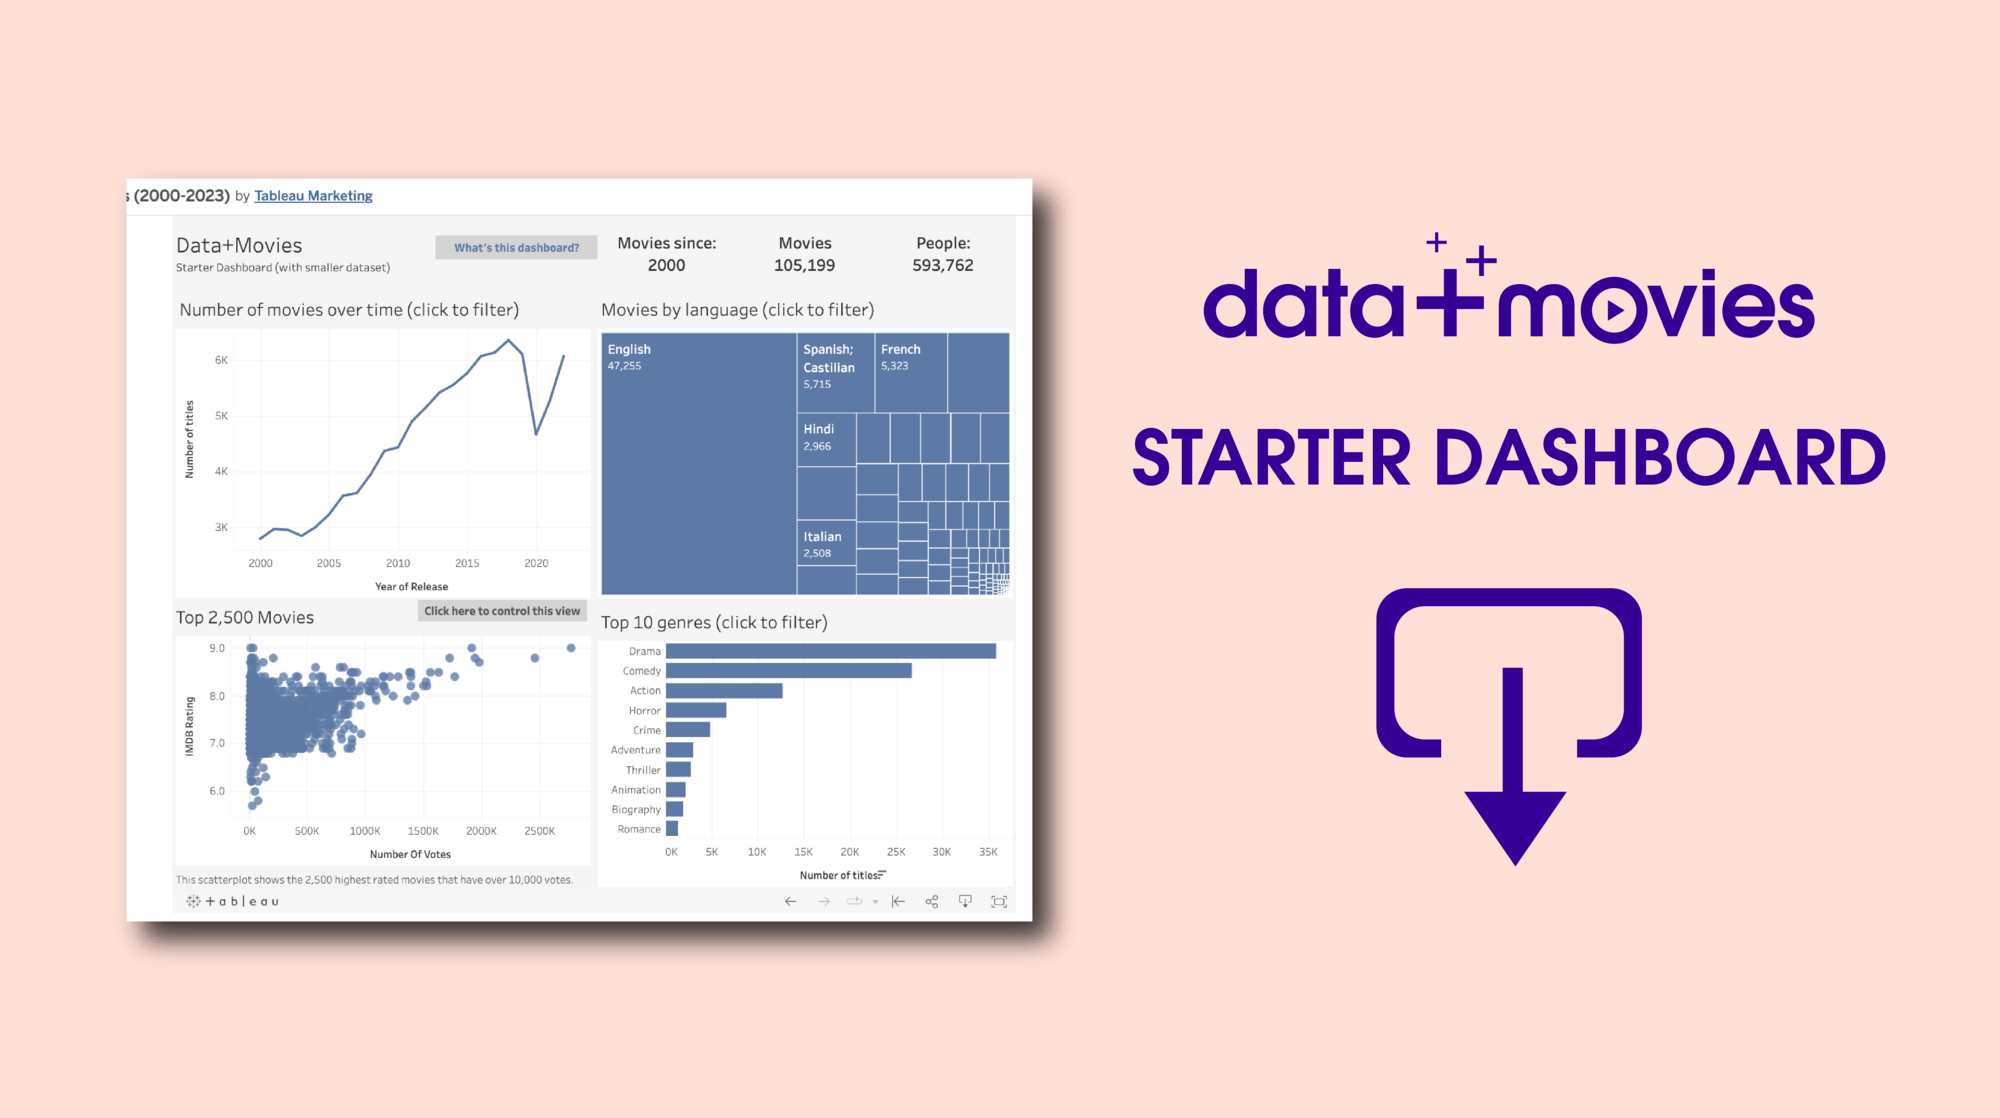 data plus movies starter dashboard icon on pink background